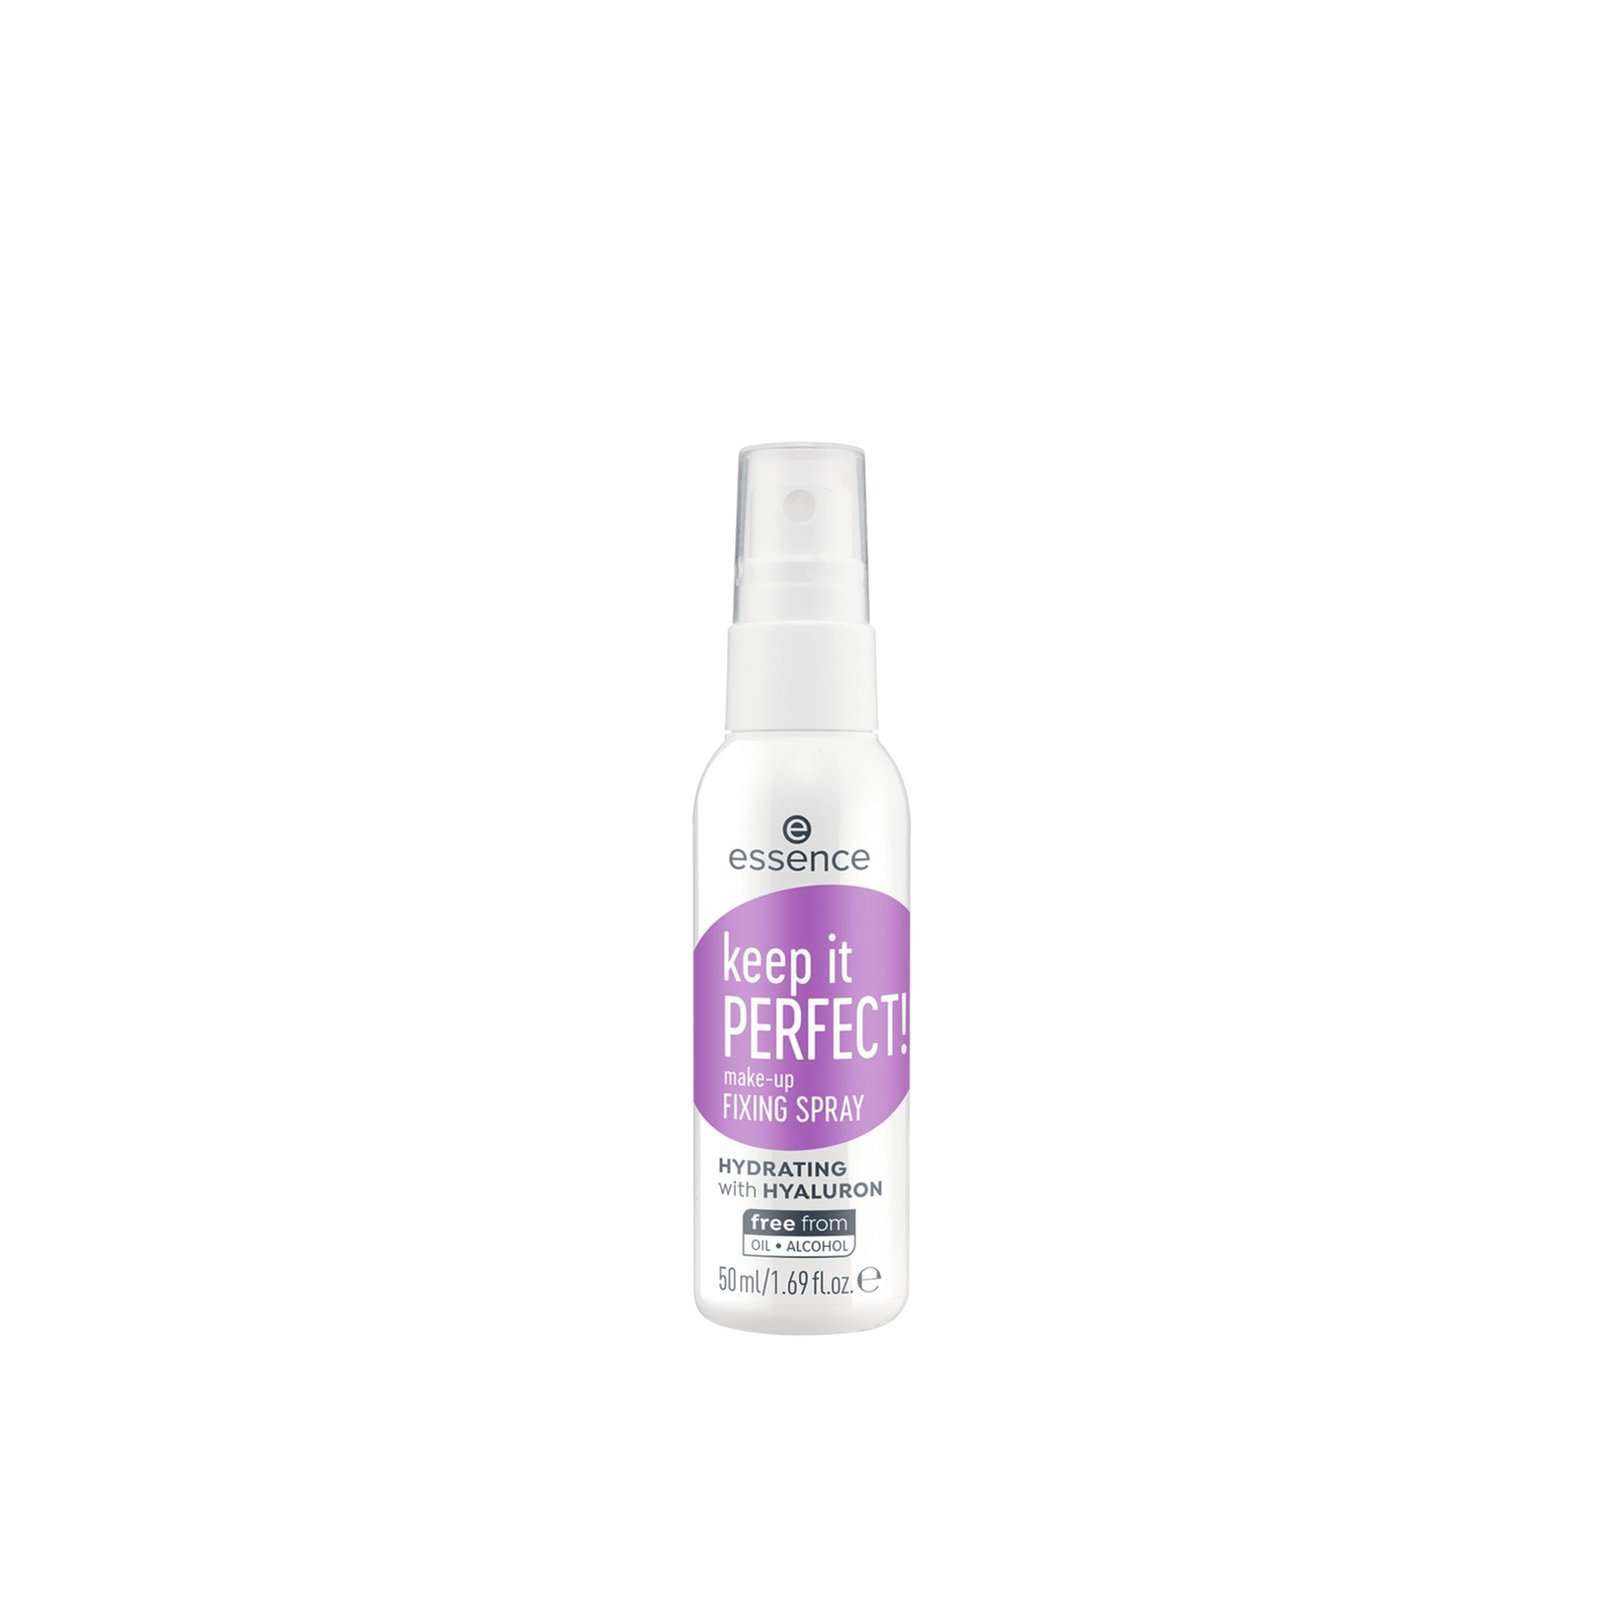 Buy essence Keep It Perfect! Make-Up Fixing Spray 50ml (1.69 fl oz) · USA